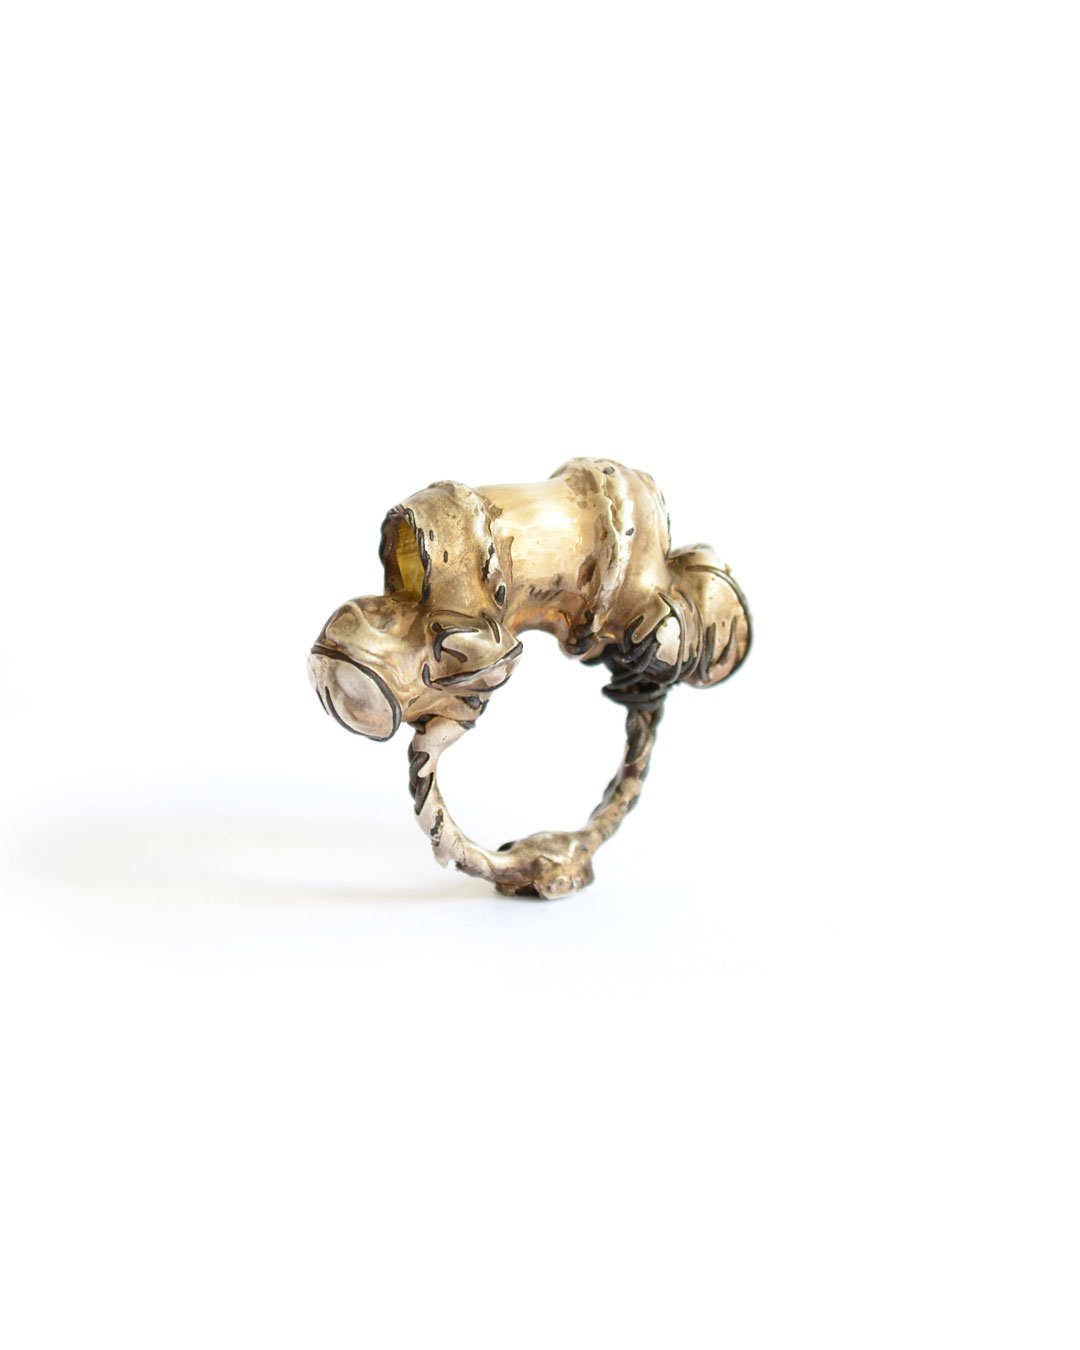 Dana Seachuga, Archetype Ring 8, 2014, ring; iron, silver, 35 x 42 x 18 mm, €605